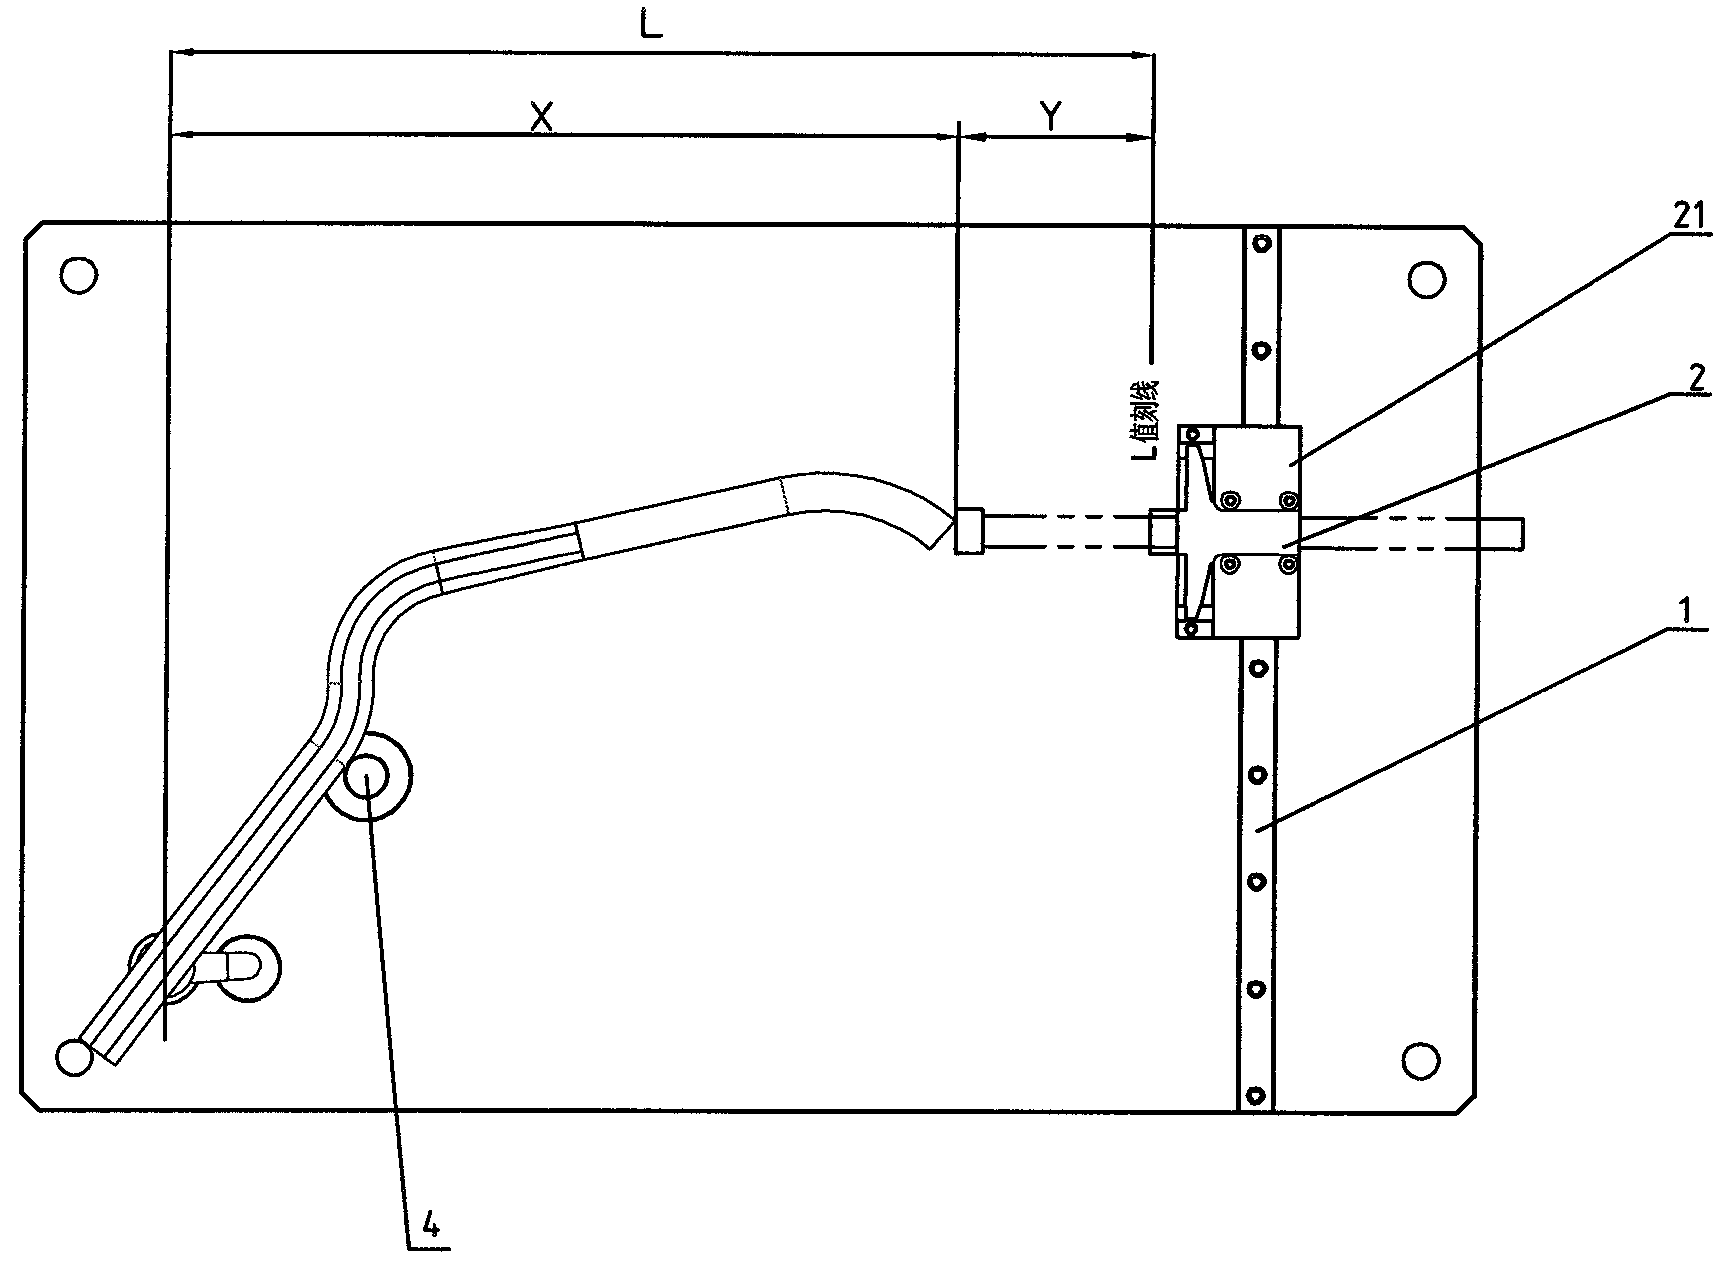 Equipment and method for measuring brake lever